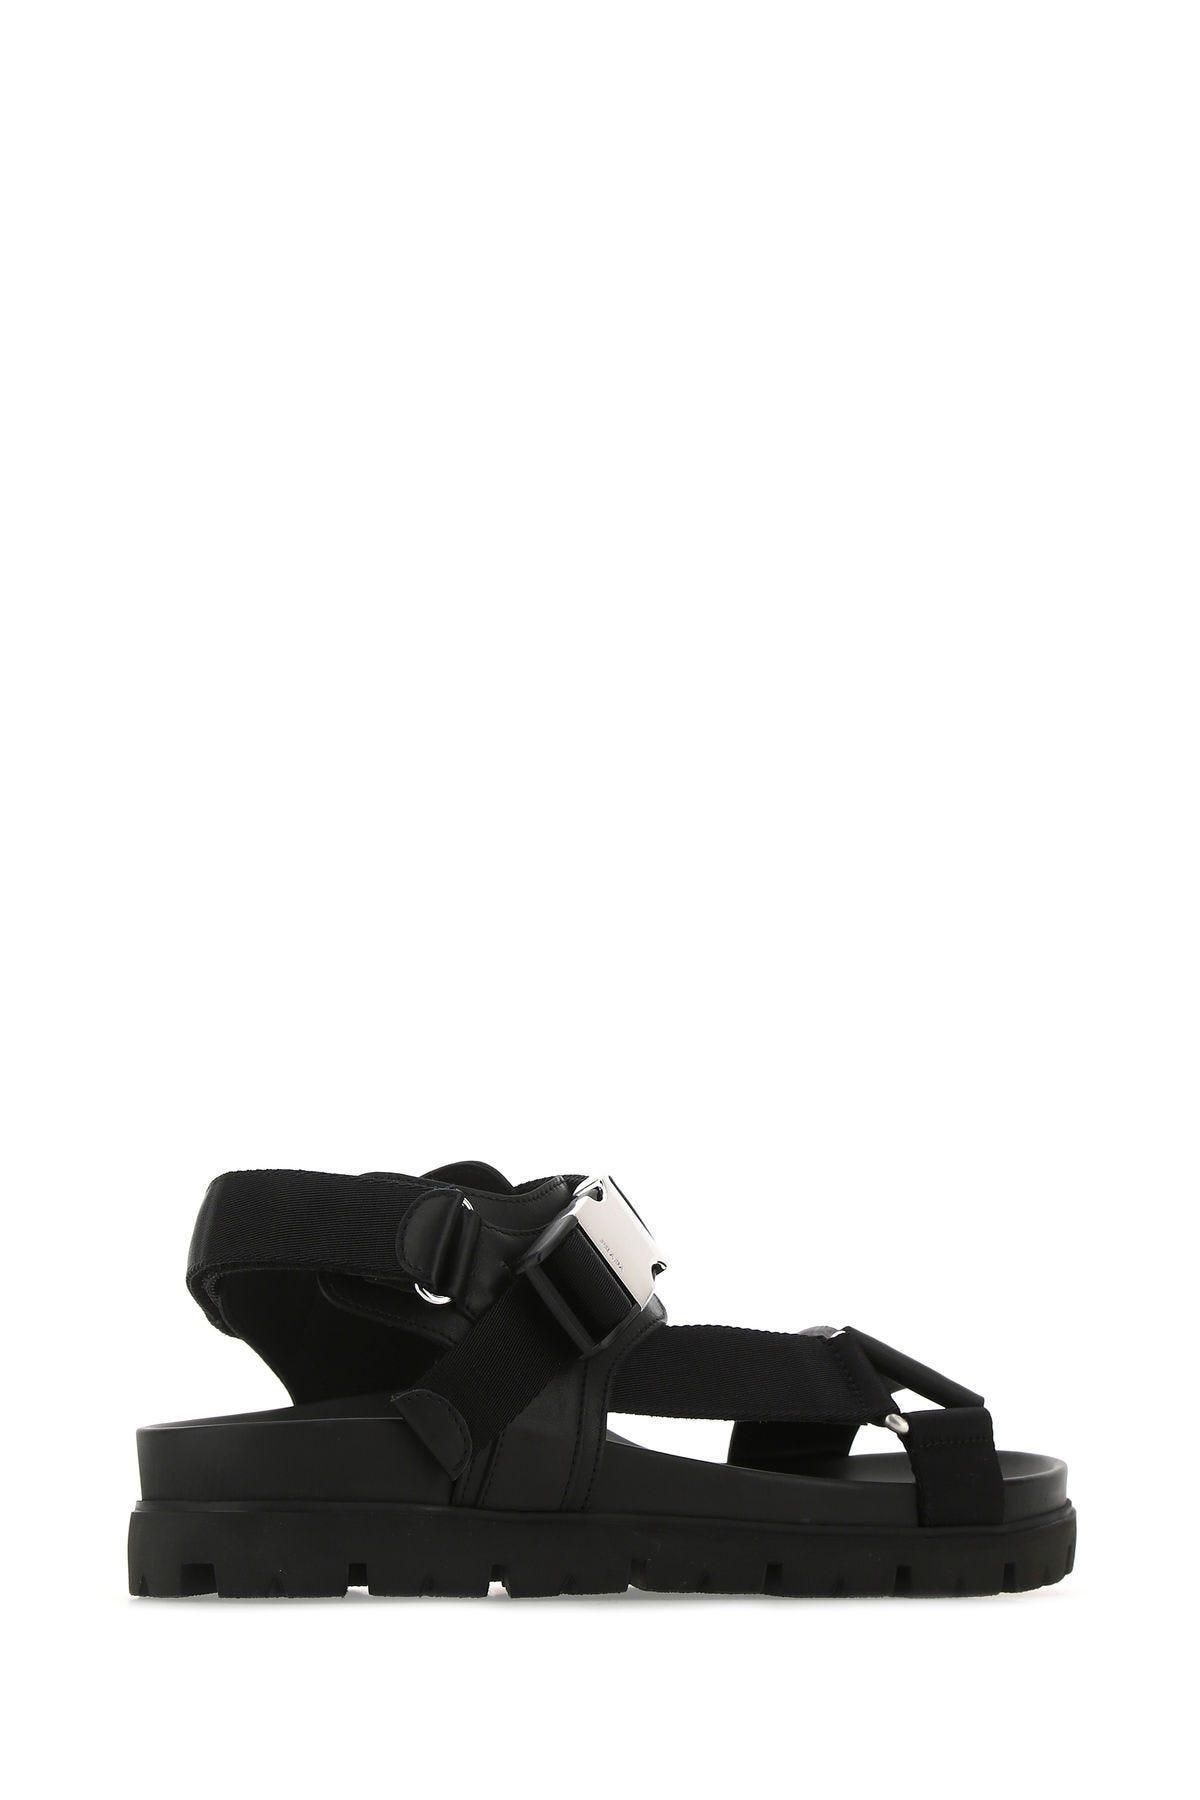 Prada Black Nylon And Leather Sandals for Men | Lyst